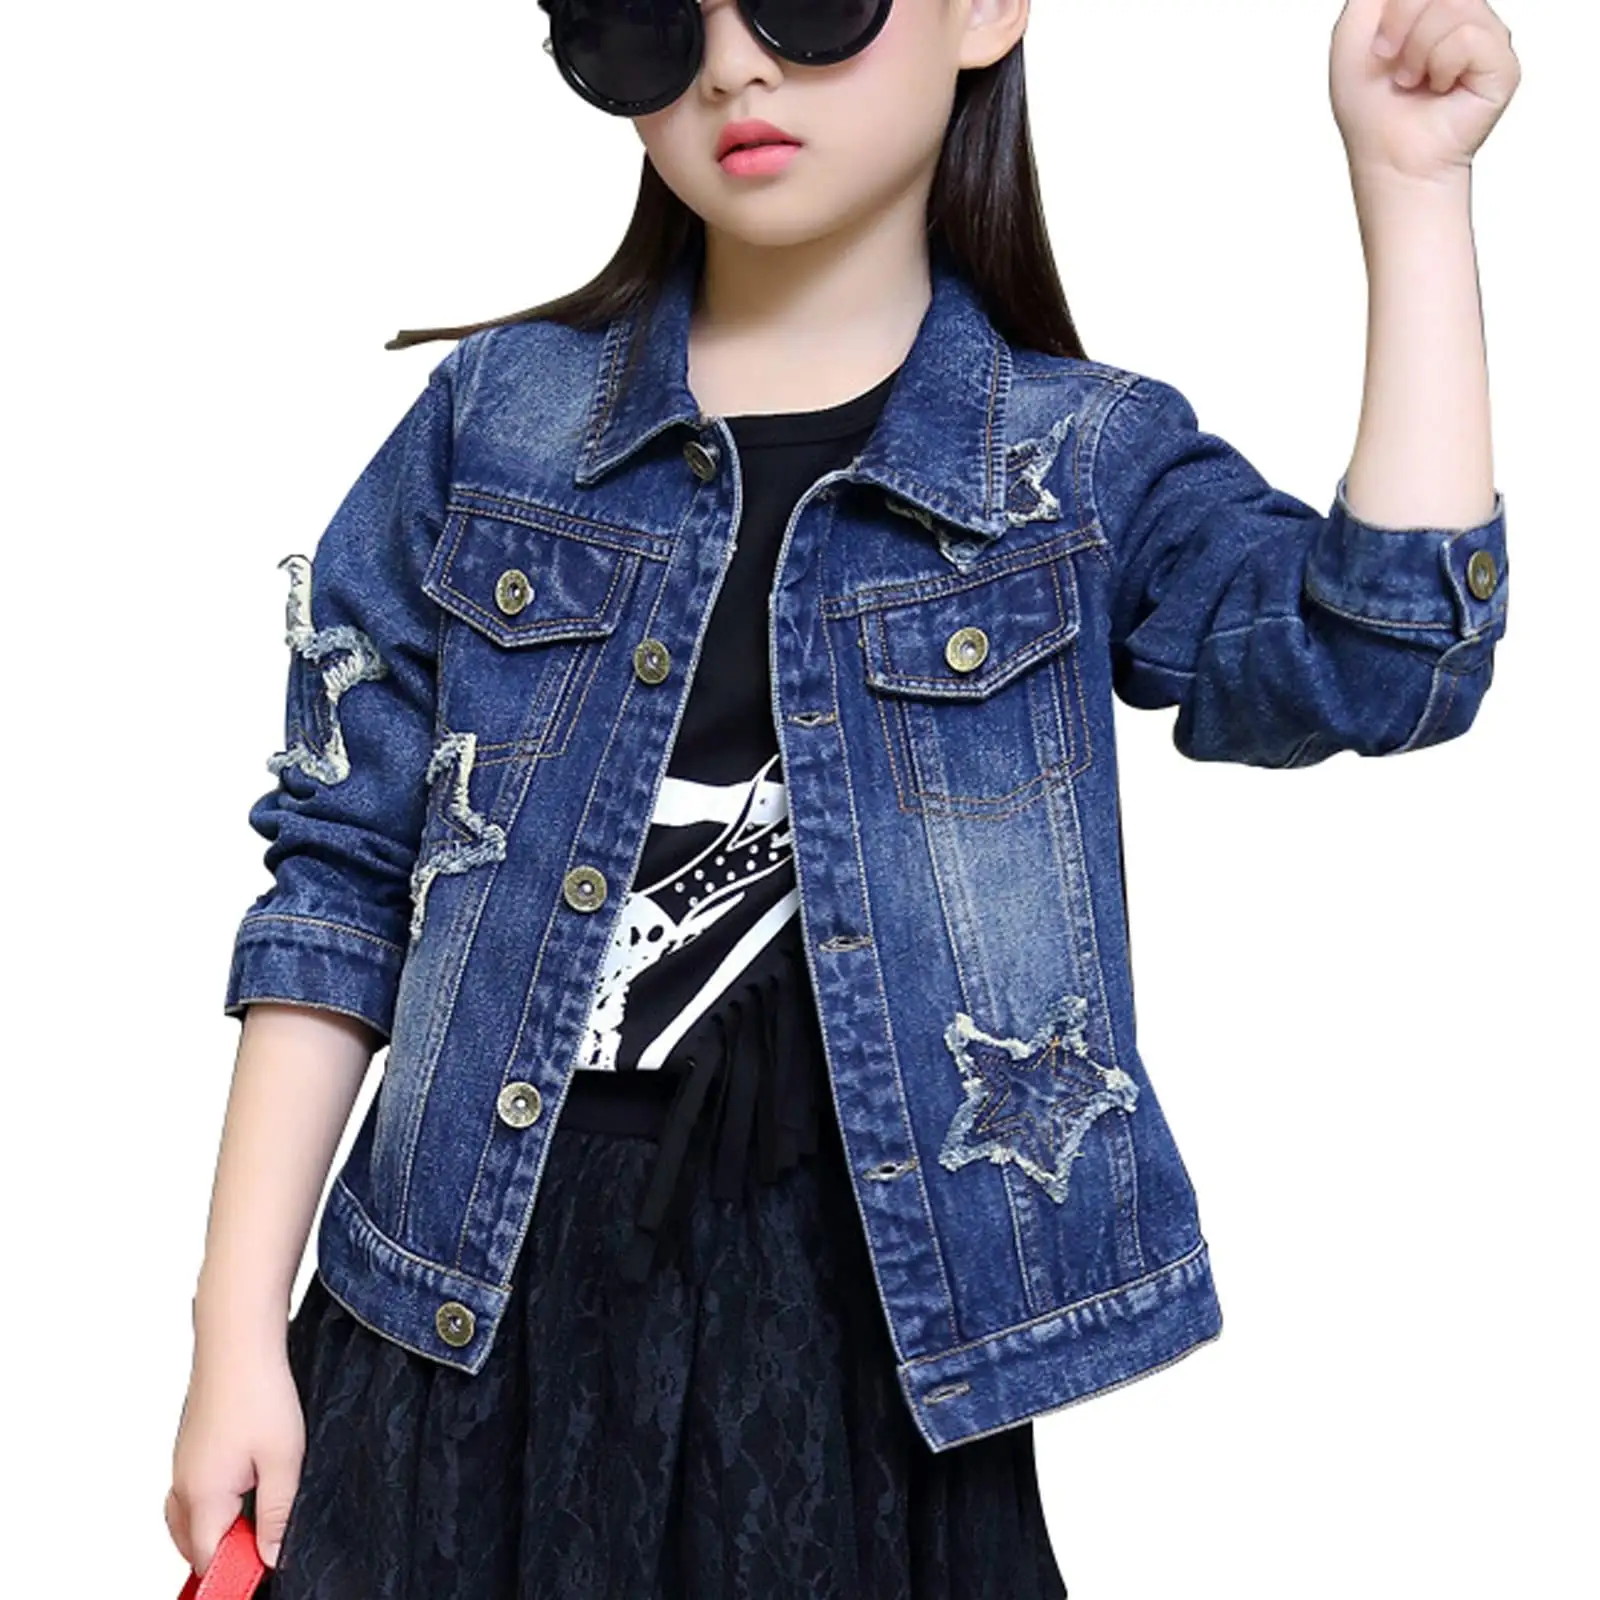 Herbst Denim-Jacke Kinderkleidung Sternmuster Jeans Mantel Mode Mädchen Denim Jean-Jacke Kindermantel